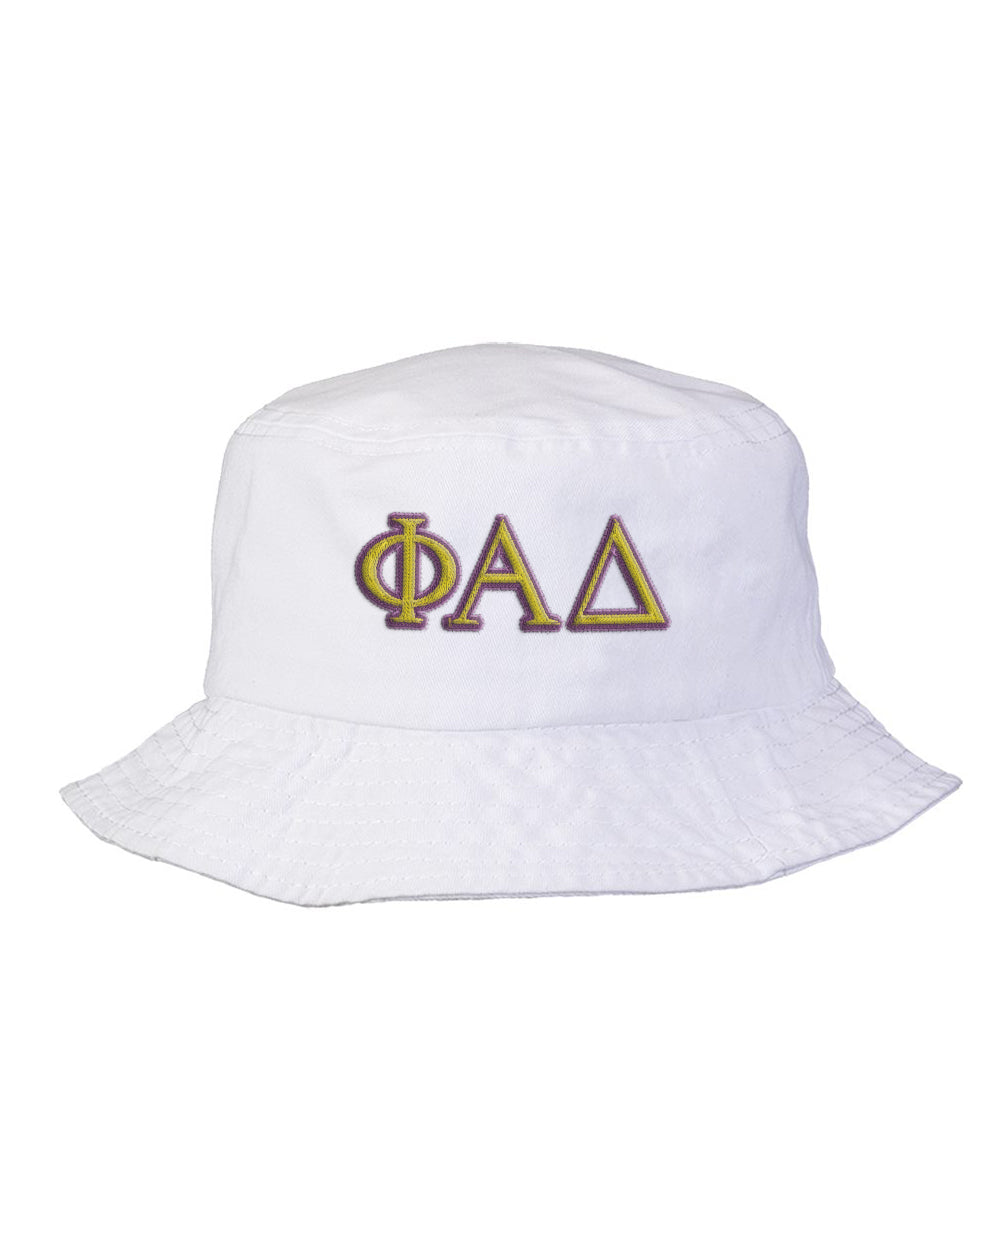 Phi Alpha Delta Embroidered Bucket Hat